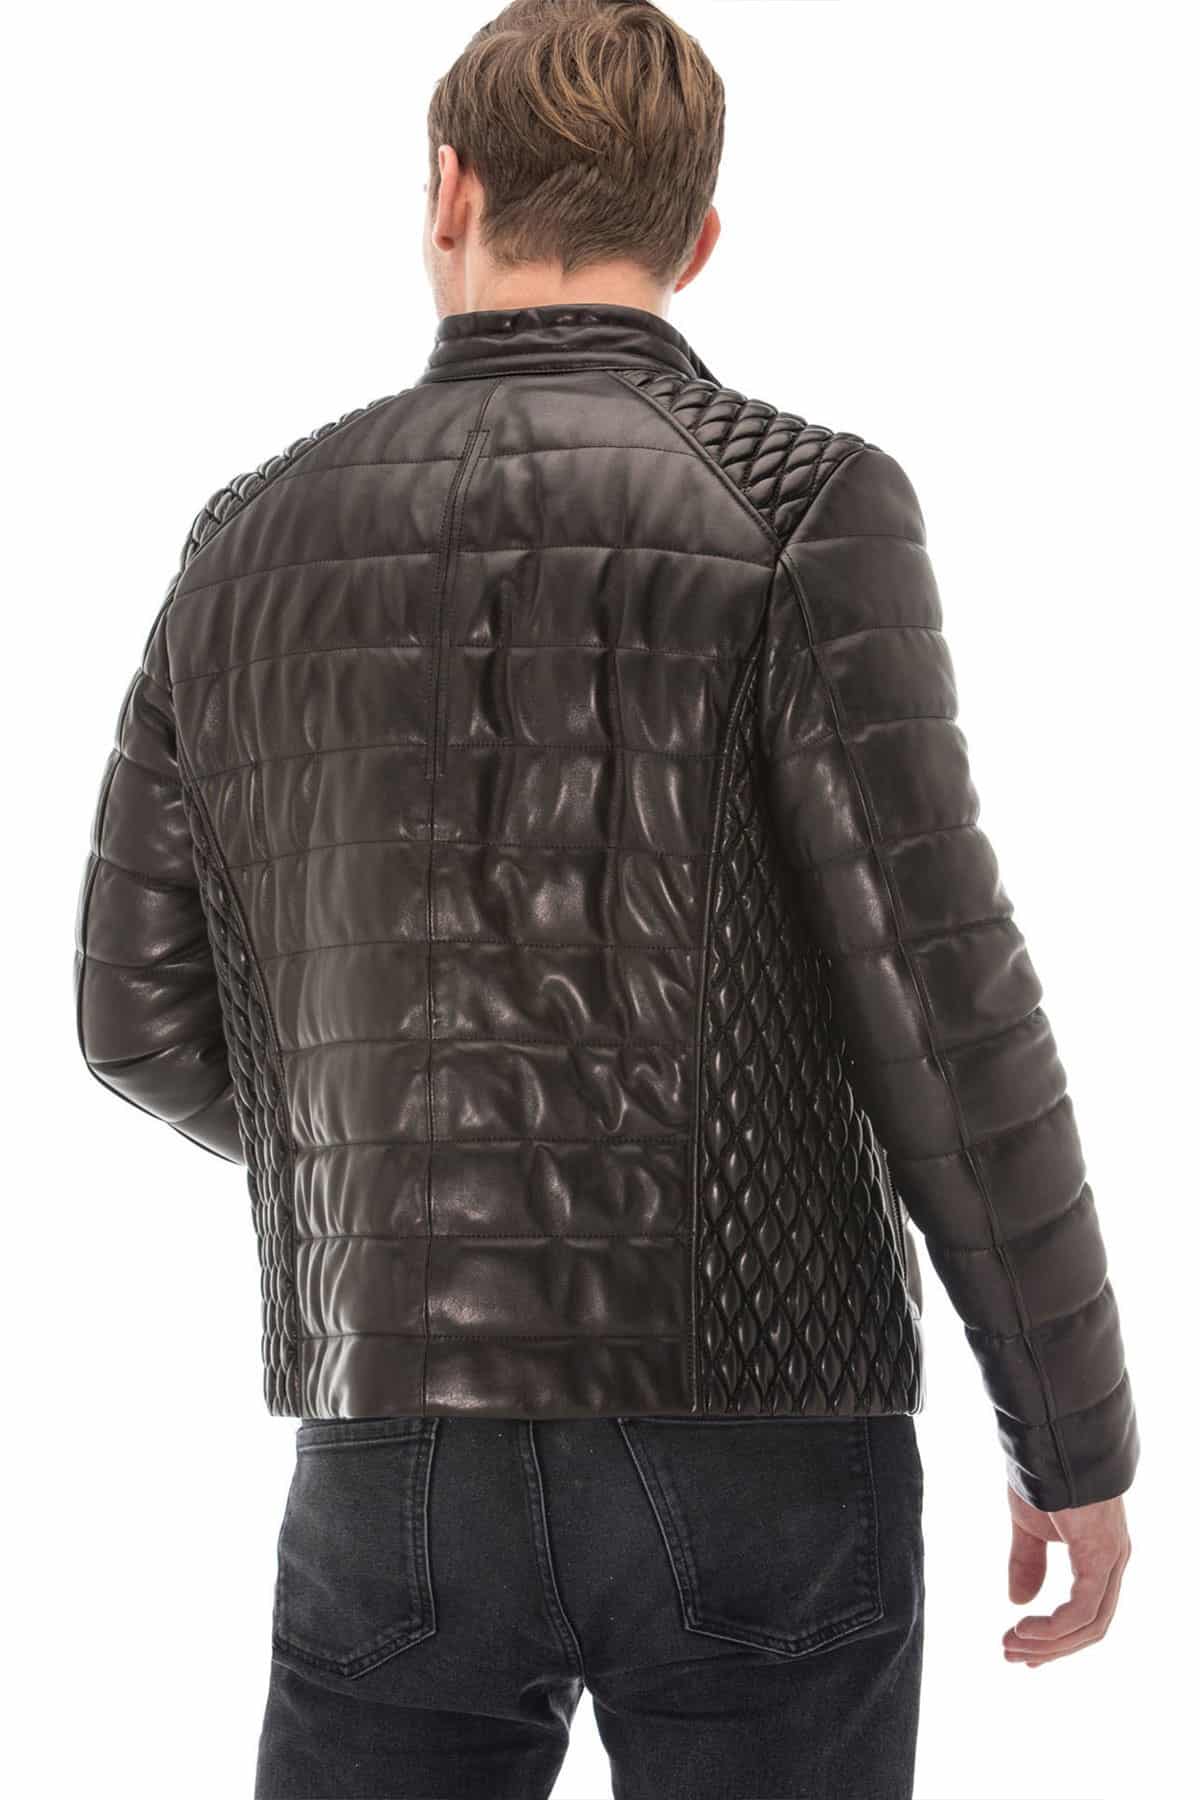 Mens Black Diamond Patterned Inflatable Leather Jacket Back